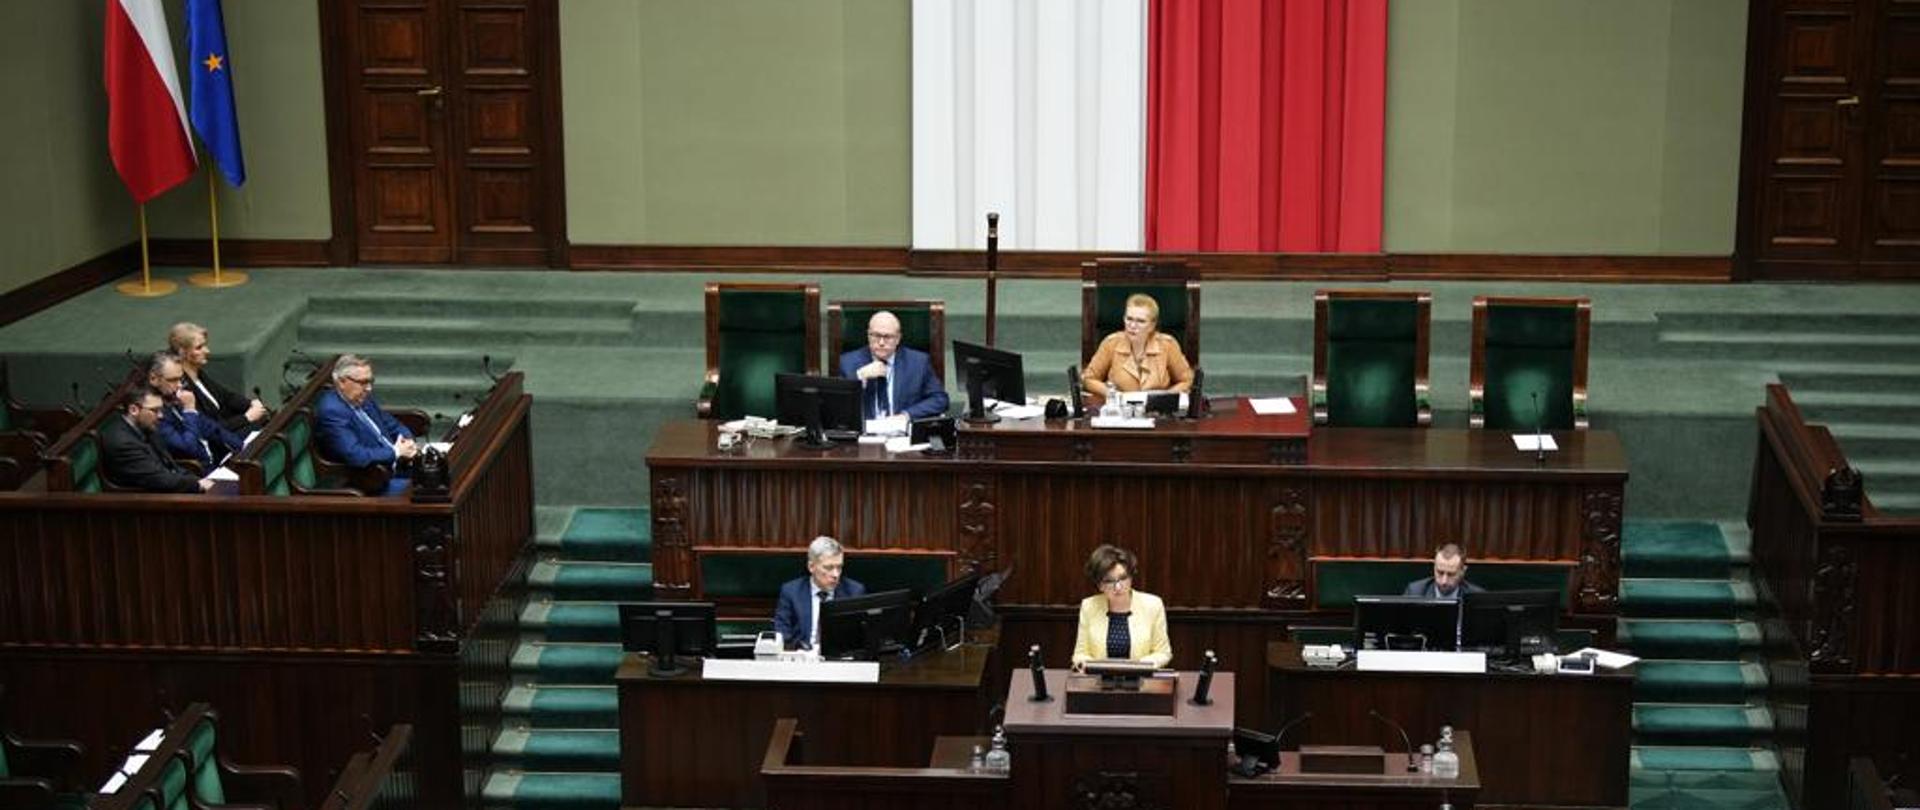 Minister_Marlena_Maląg_-_Sejm